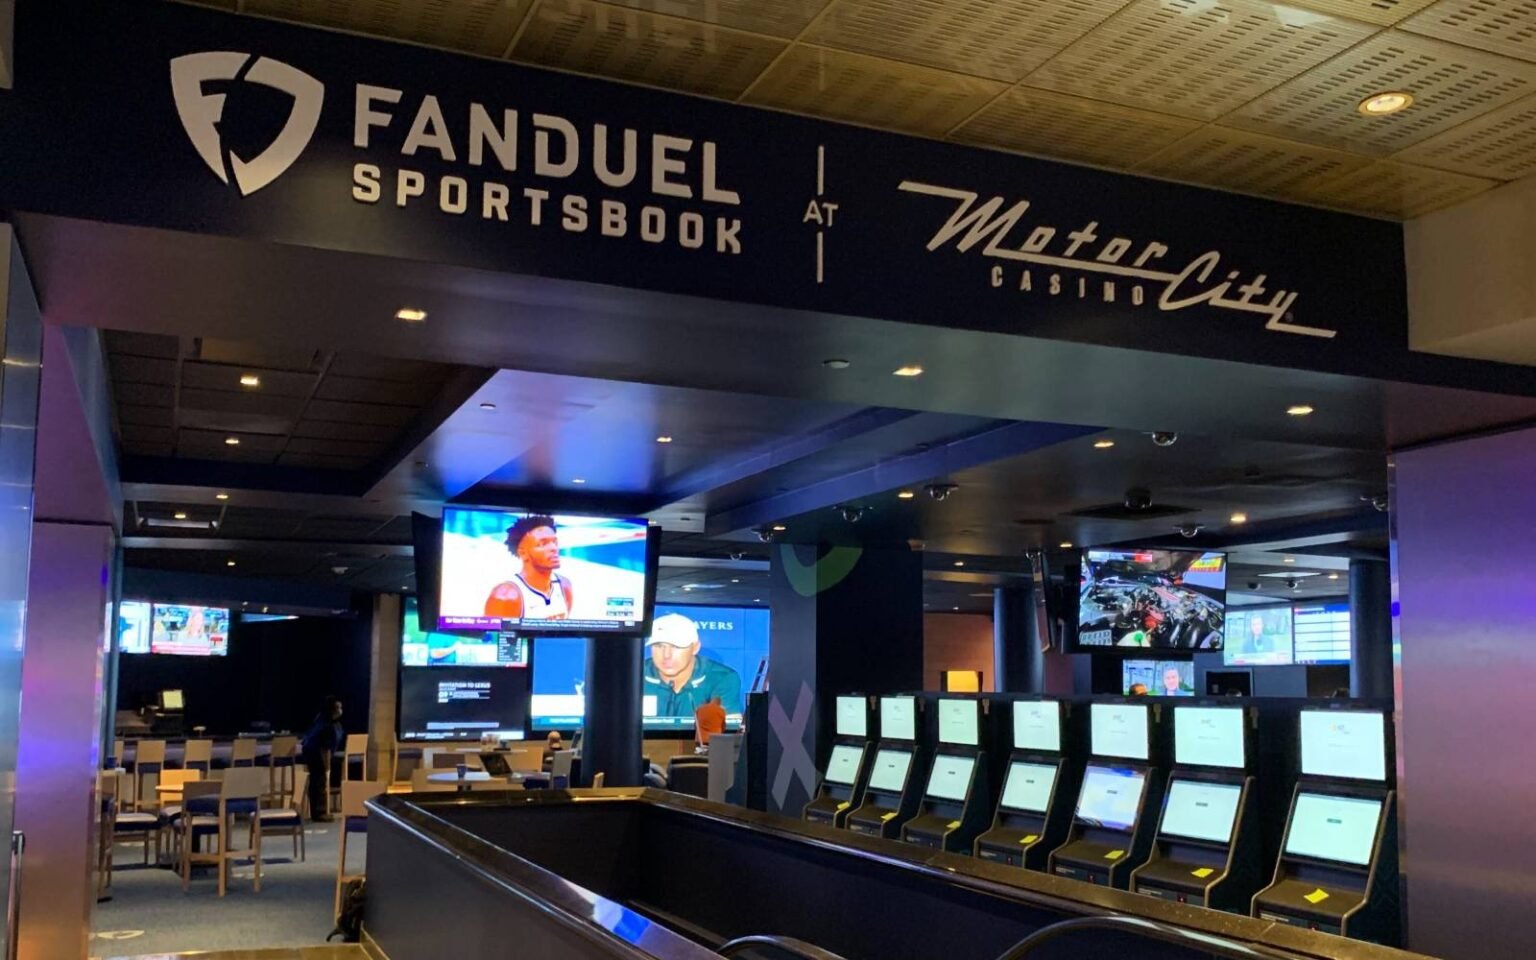 fanduel sportsbook at motorcity casino hotel